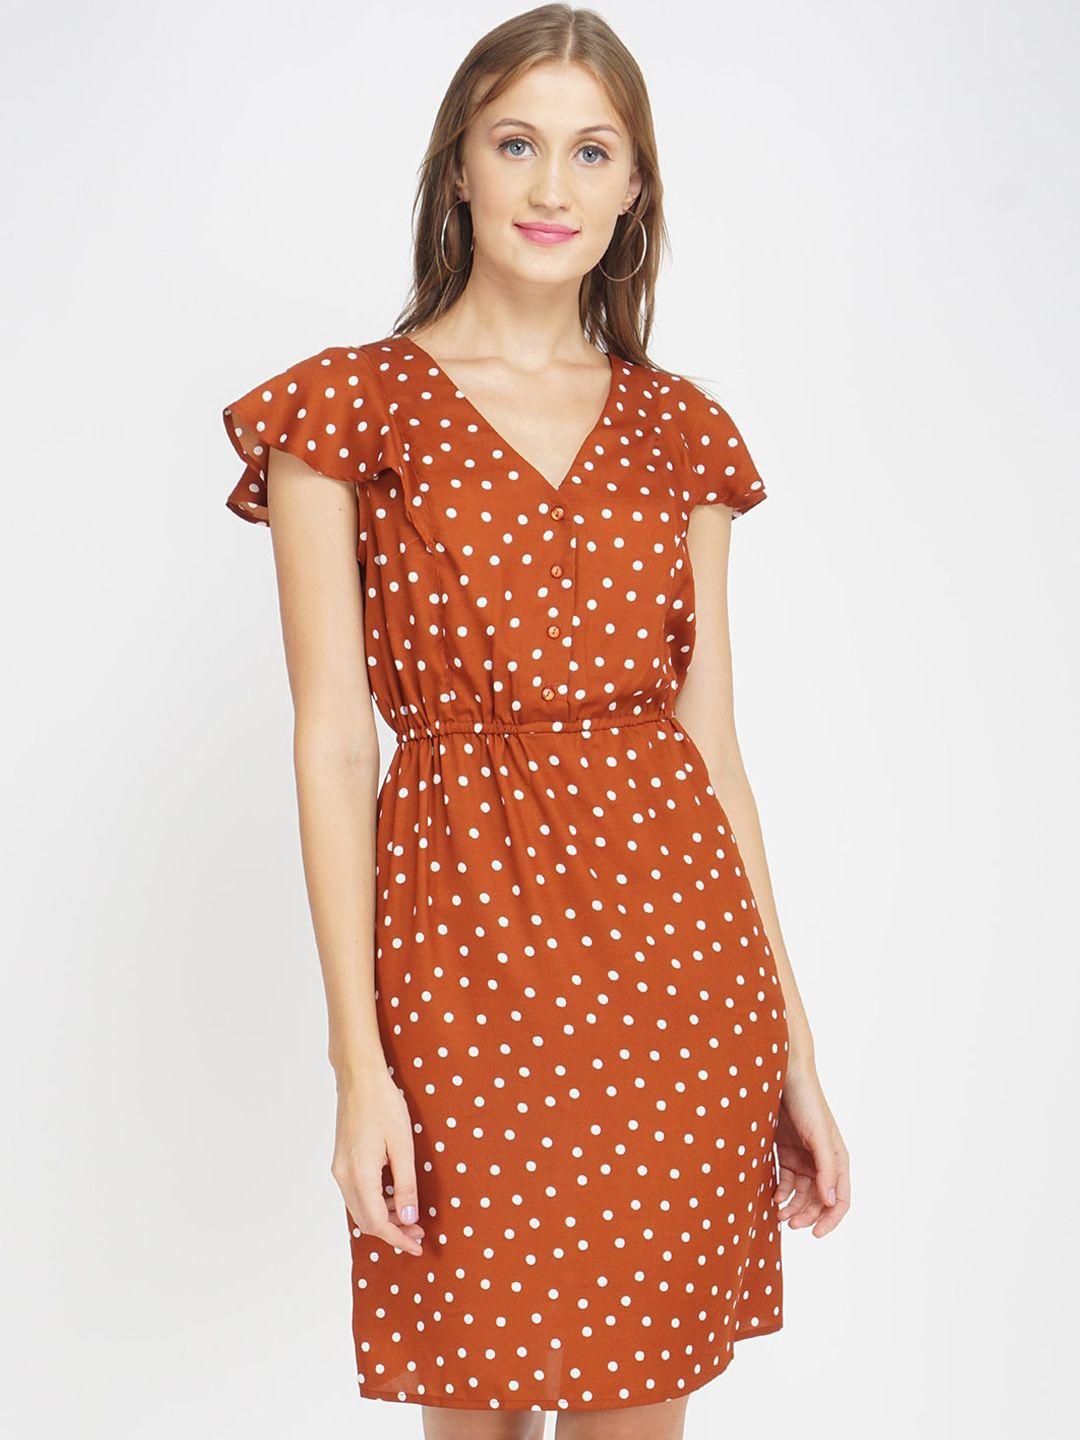 oxolloxo rust orange & white polka dot print a-line dress